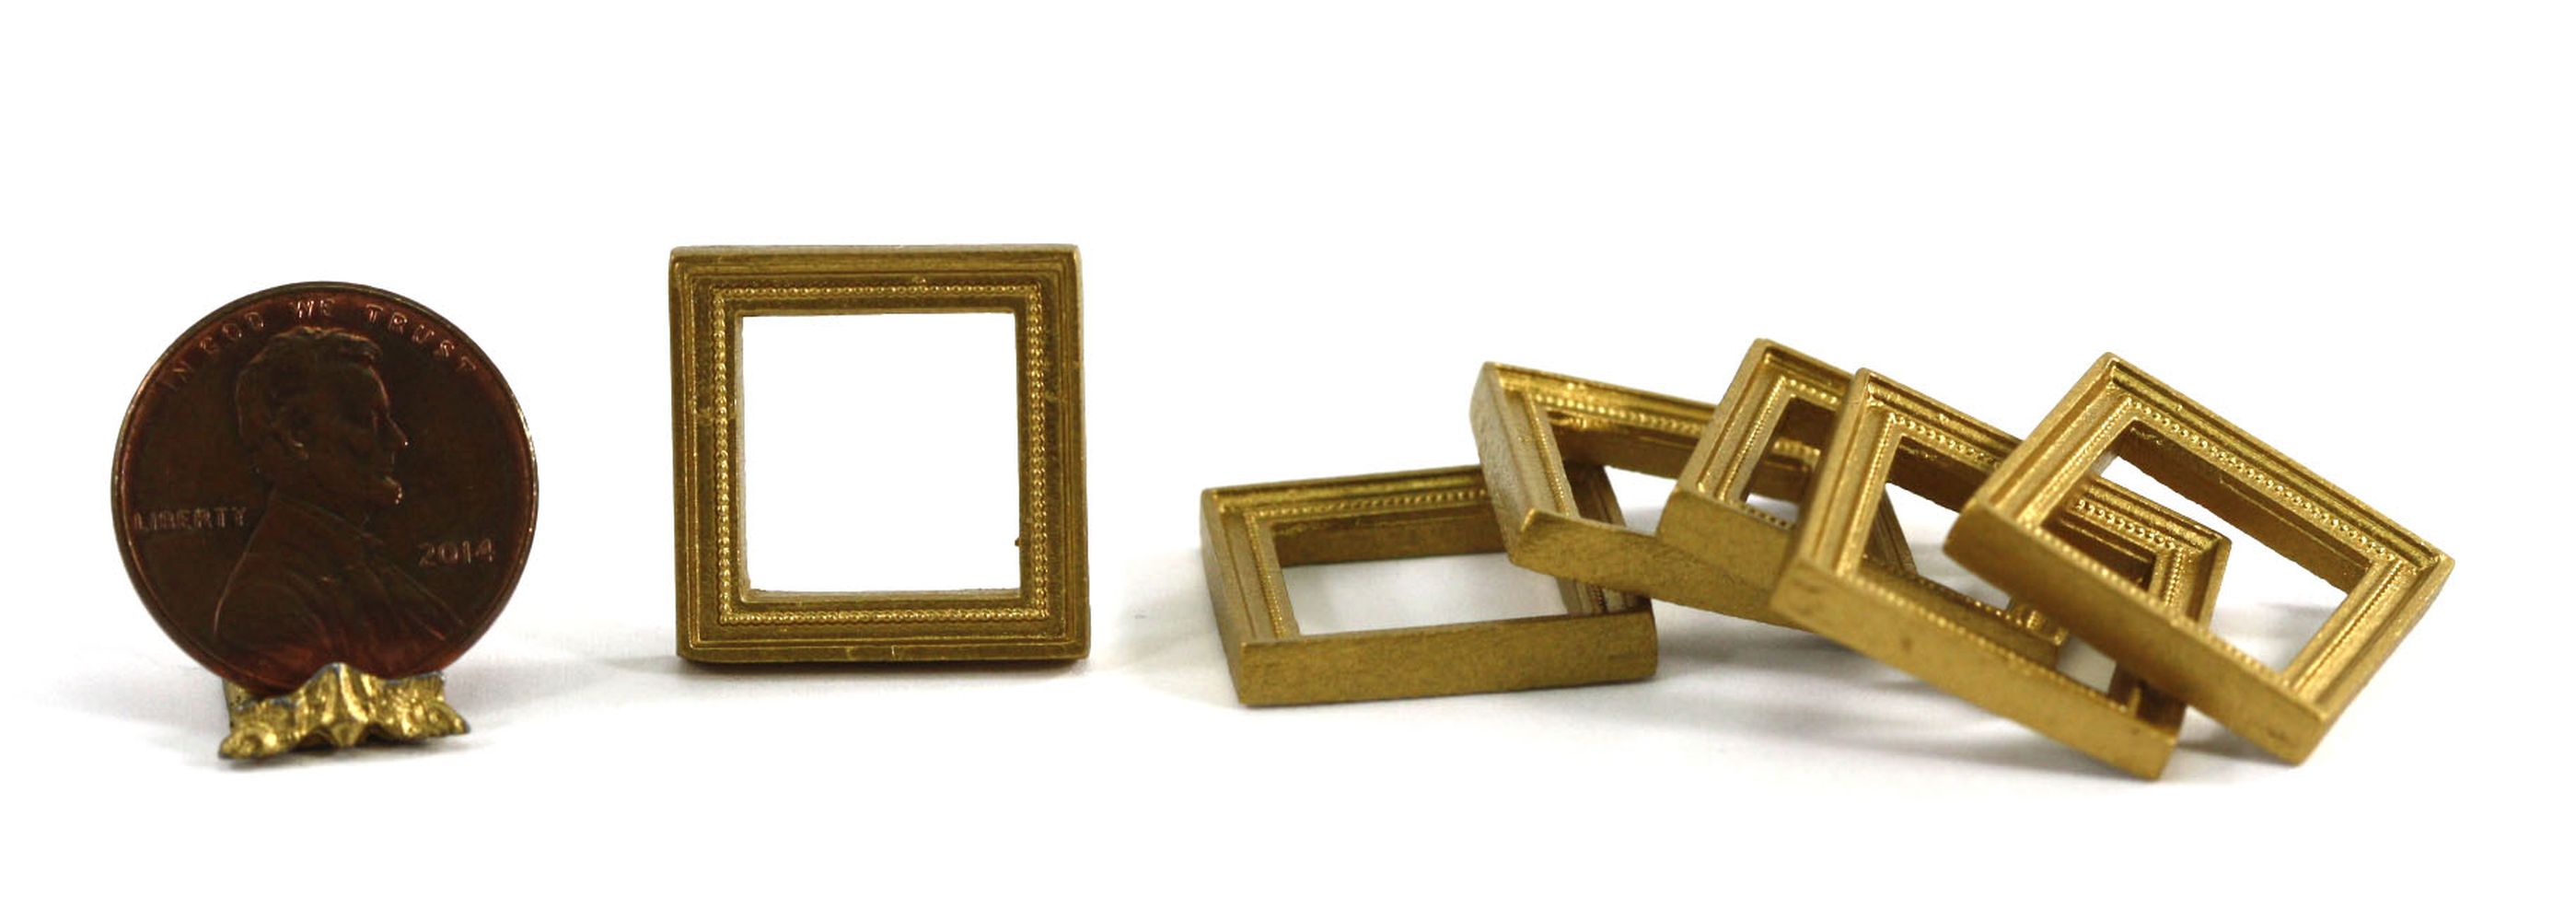 small square photo frames